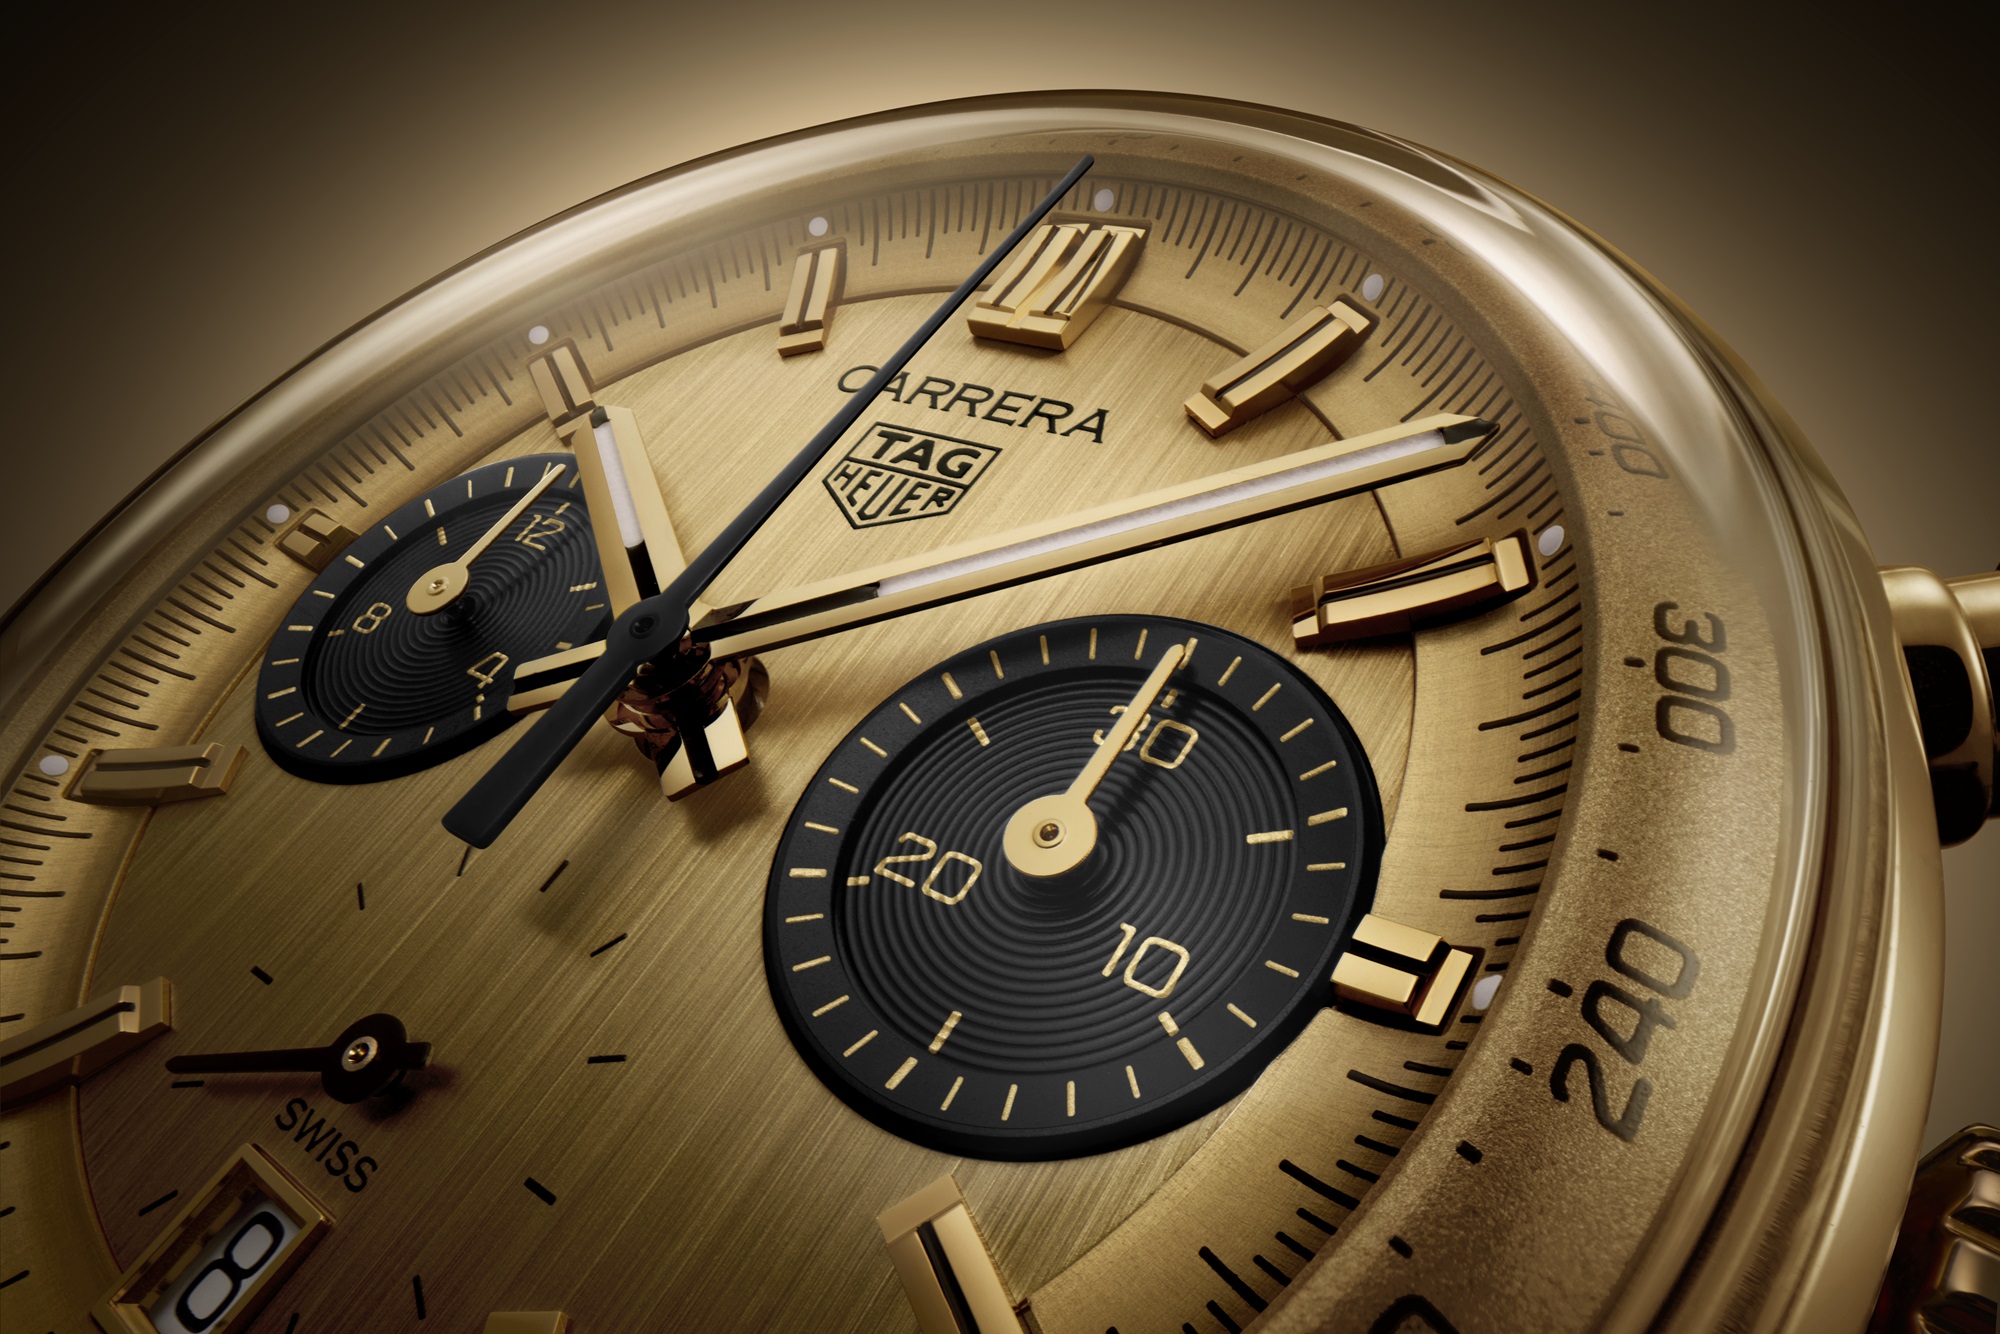 TAG Heuer Carrera gold chronograph